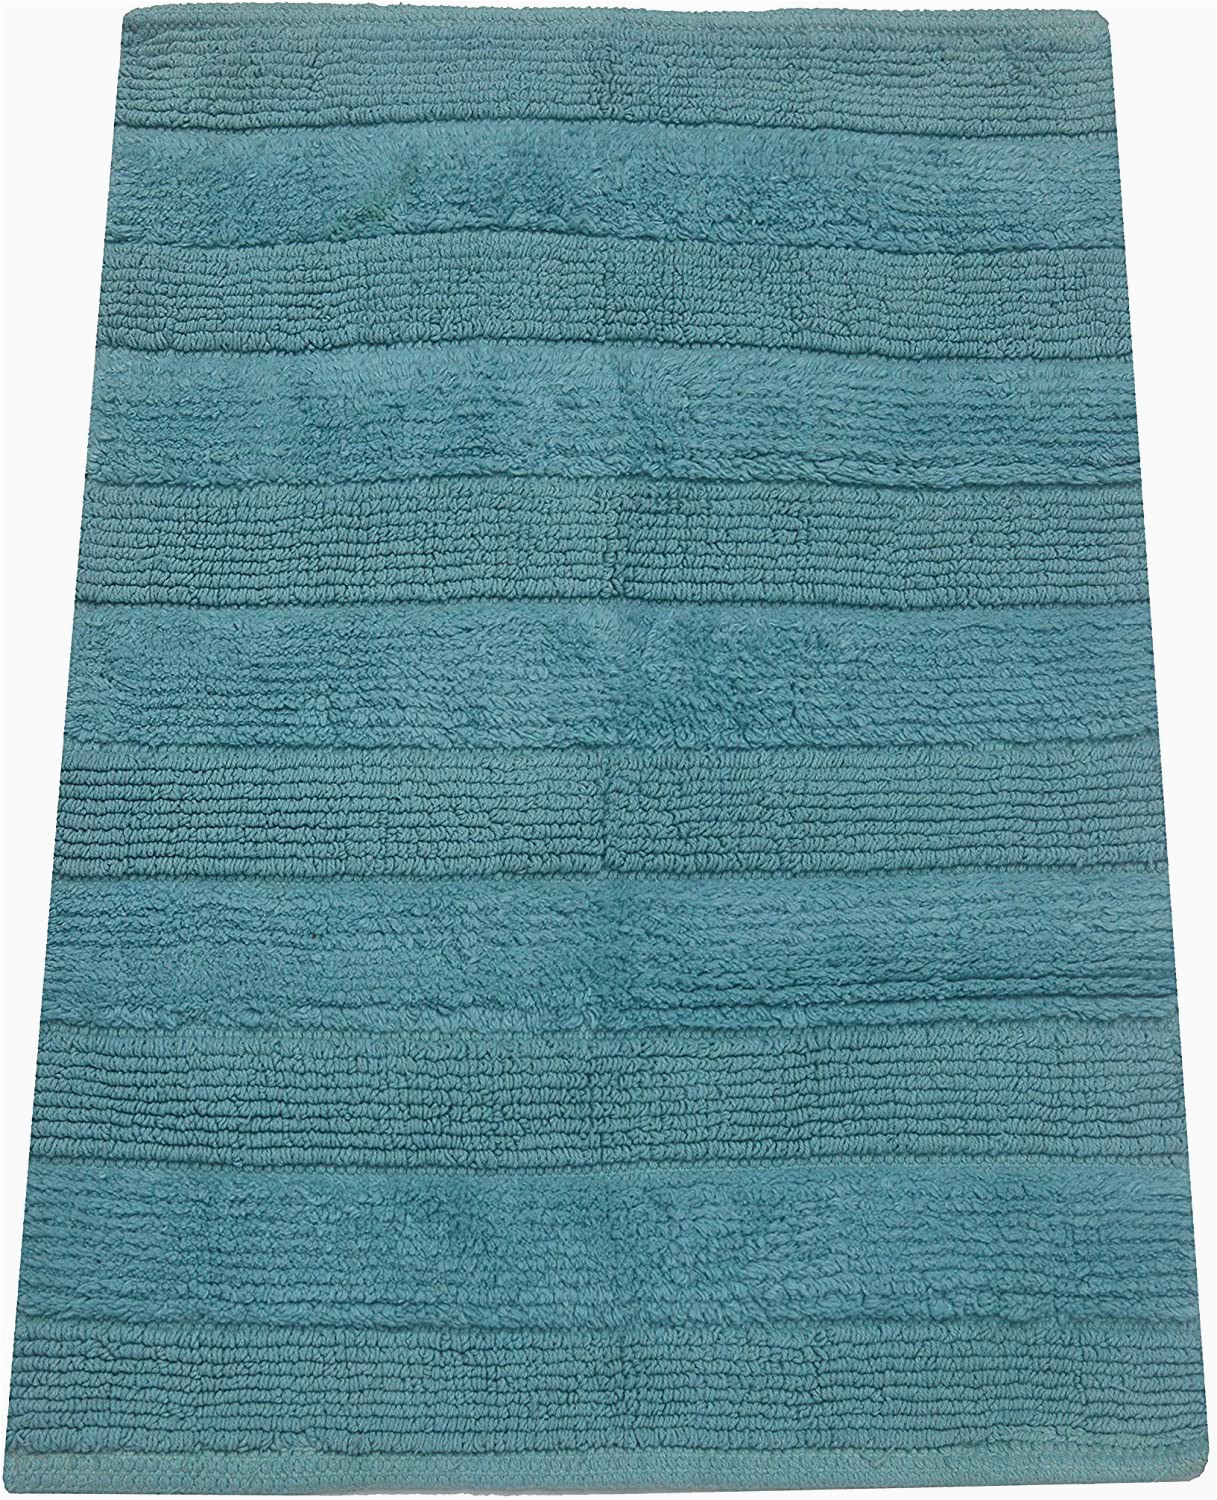 Blue and Green Bathroom Rugs Chardin Home – Thai Spa Cotton Hand Woven Bathroom Rug Size 20”x30” Light Blue with Latex Spray Back